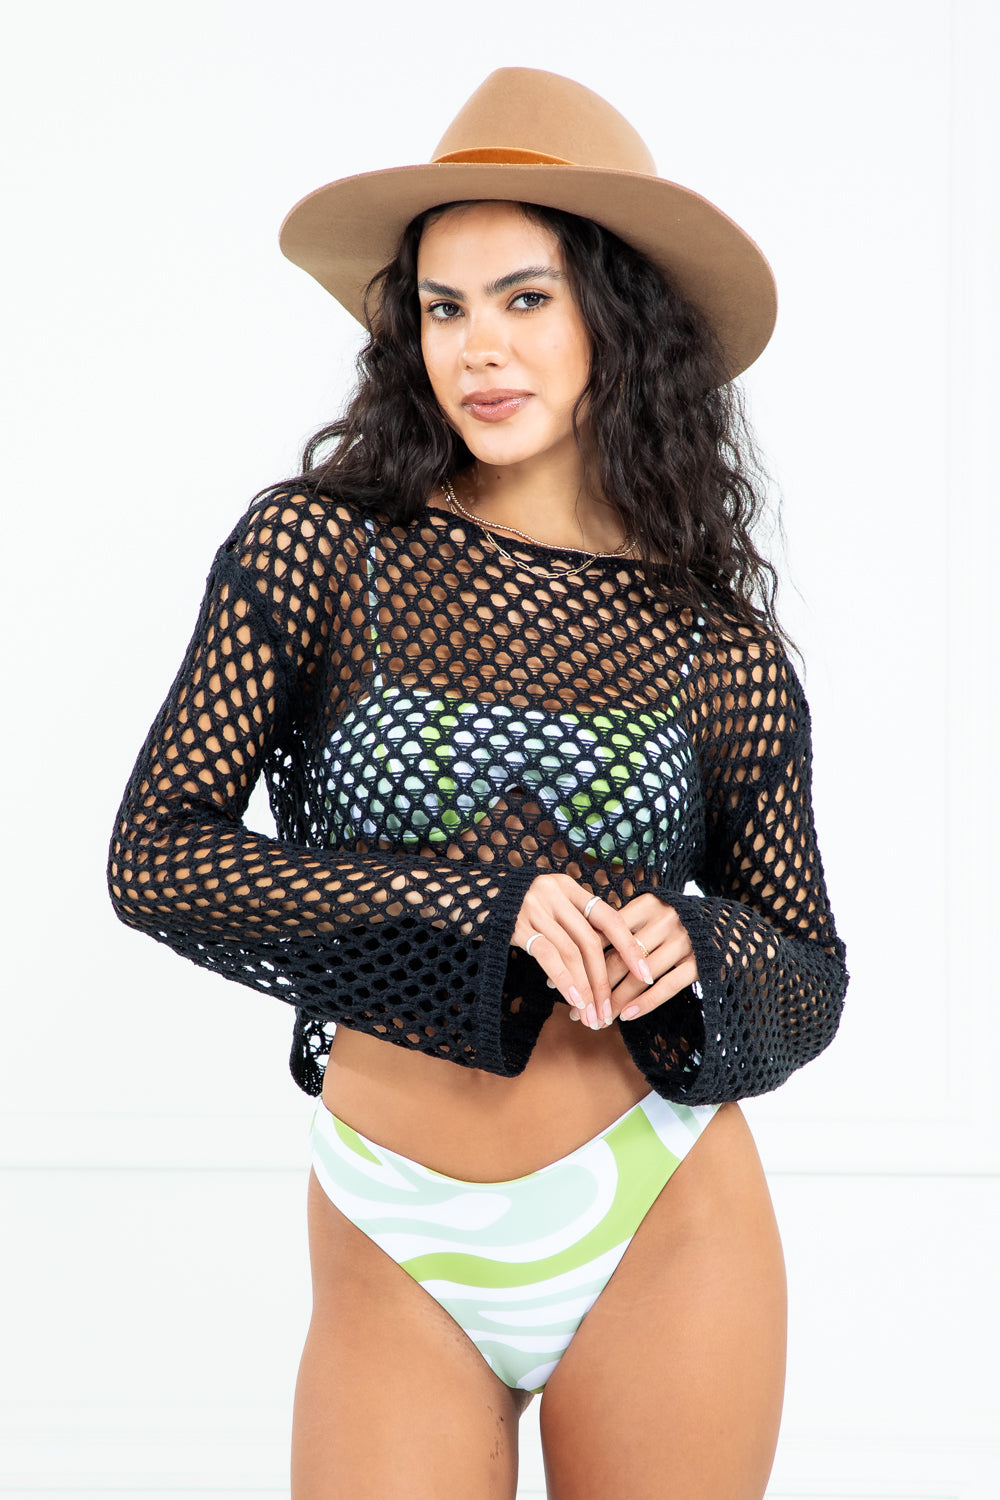 Layla Green Long Sleeve Crochet Crop Top